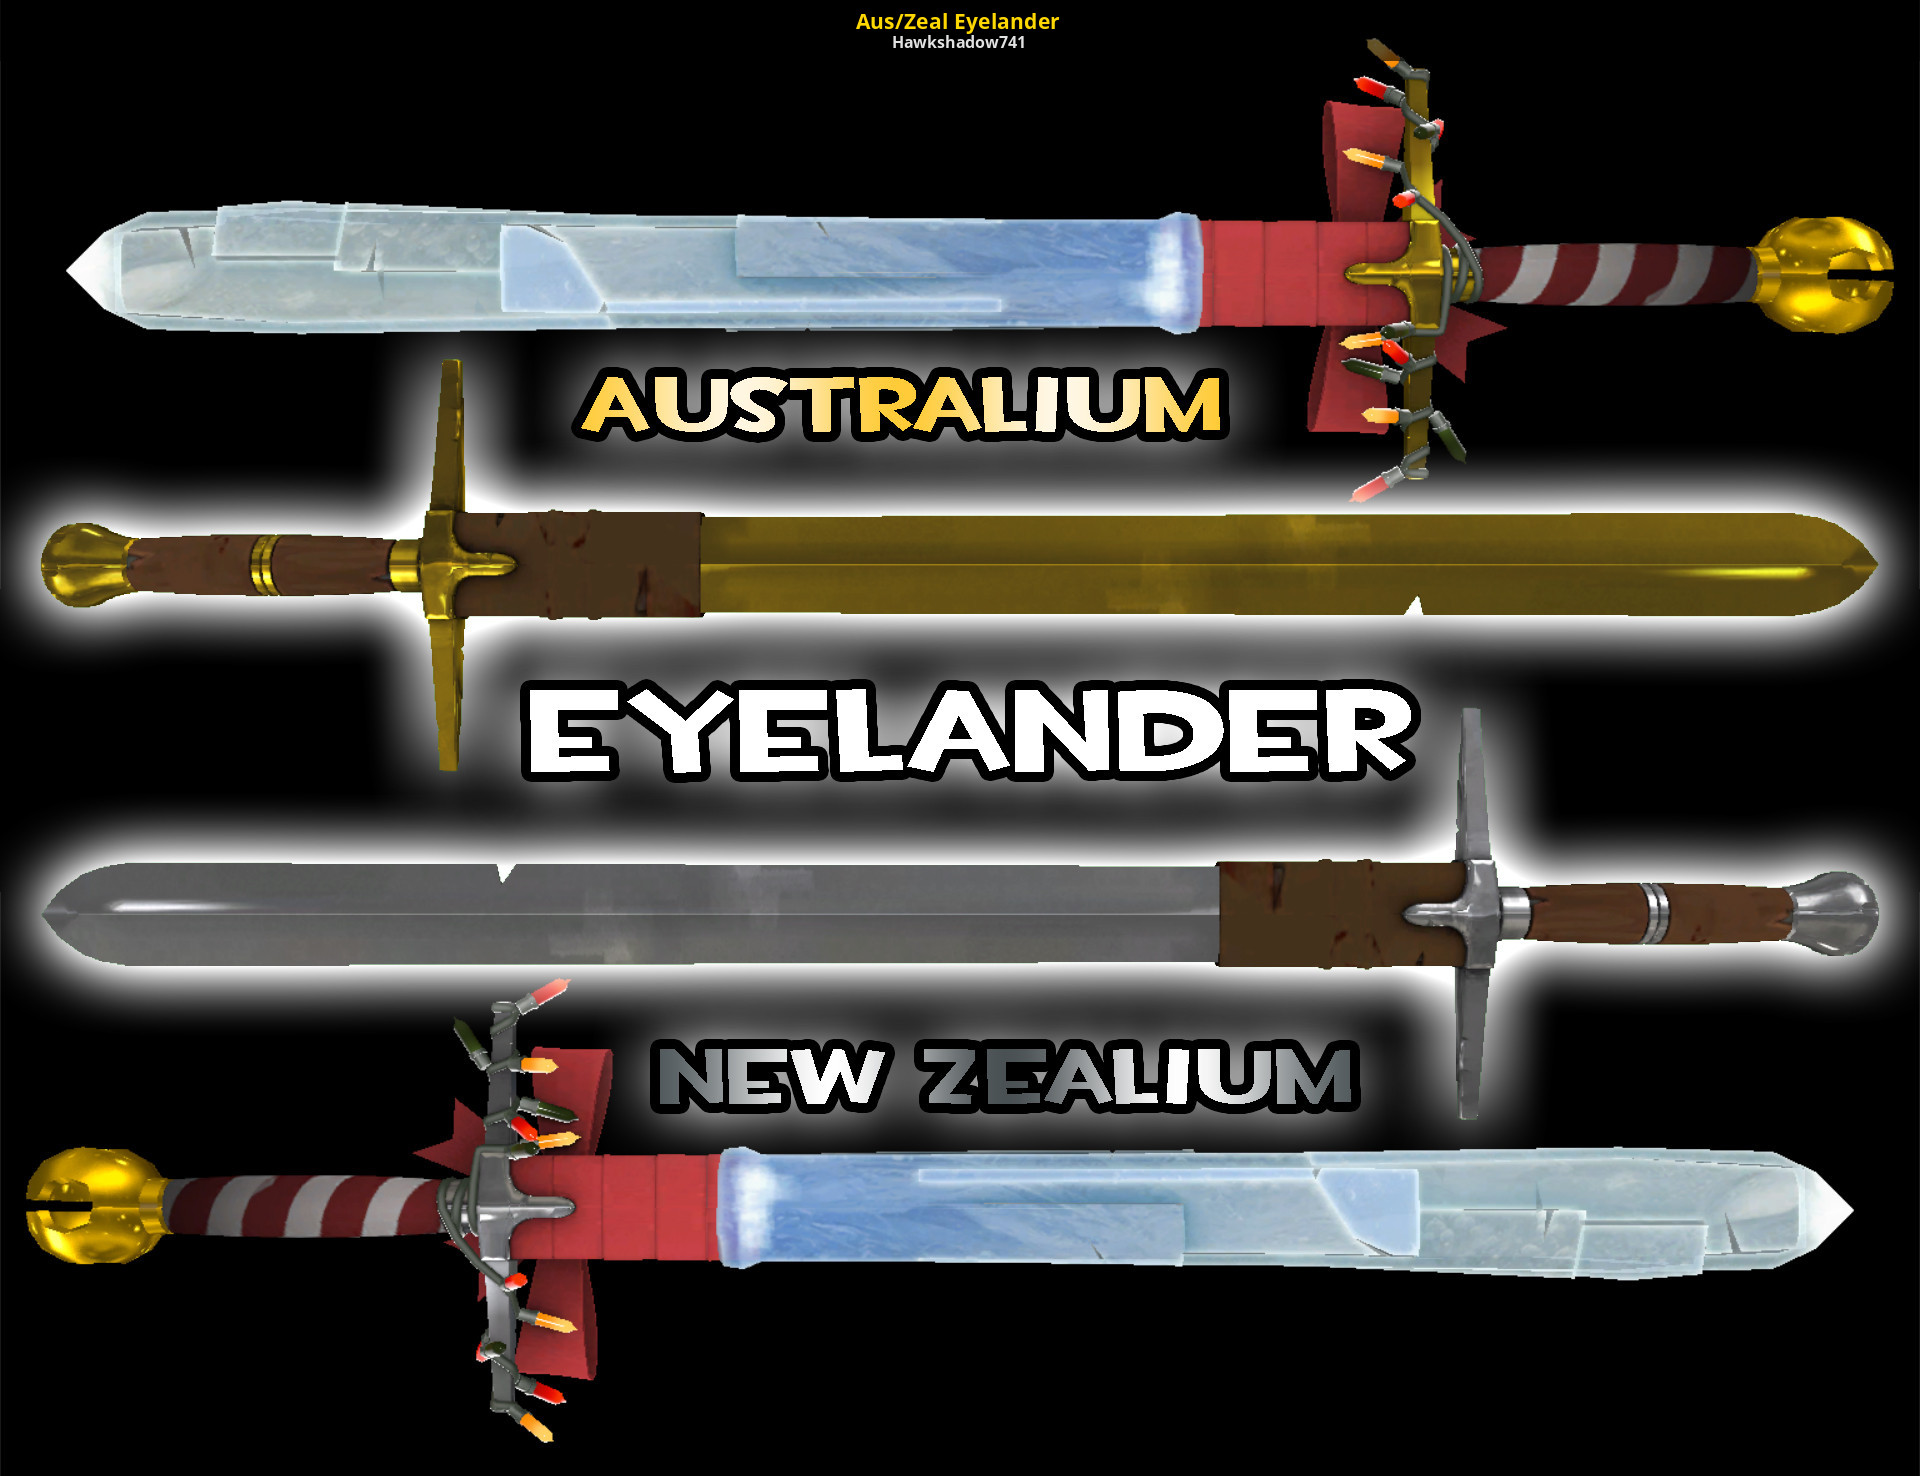 Aus/Zeal Eyelander Team Fortress 2 Mods.